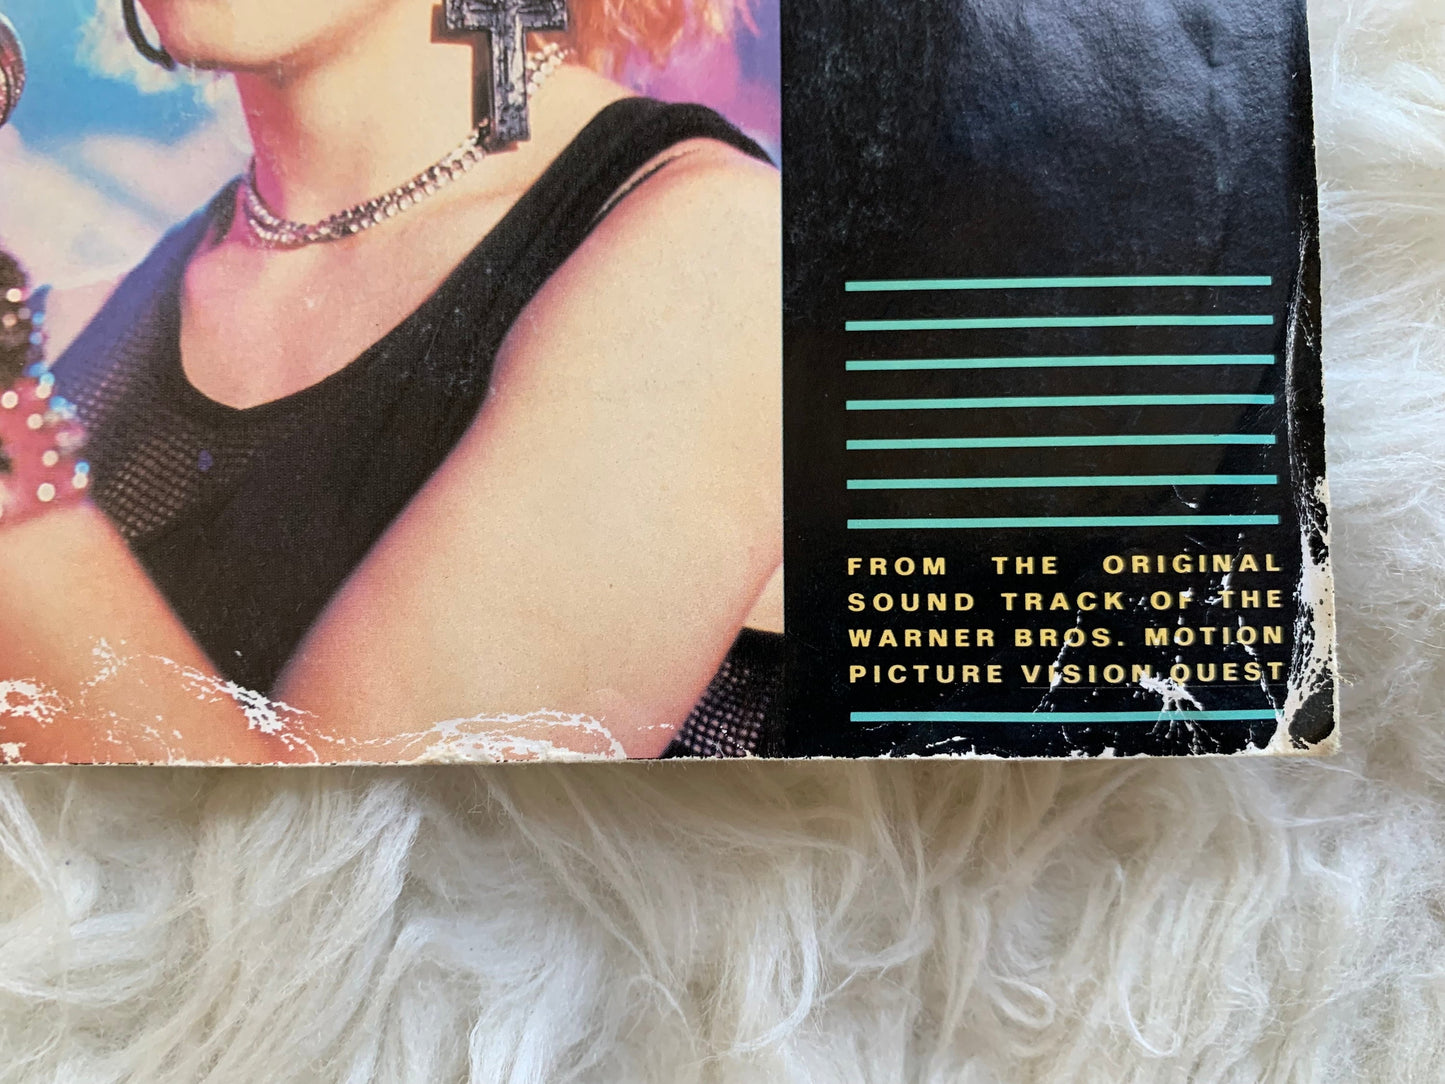 Madonna Crazy for You, Berlin No More Words Geffen 7-29051 45 RPM 7" Records 1980's Madonna Singles Vintage Vinyl Records